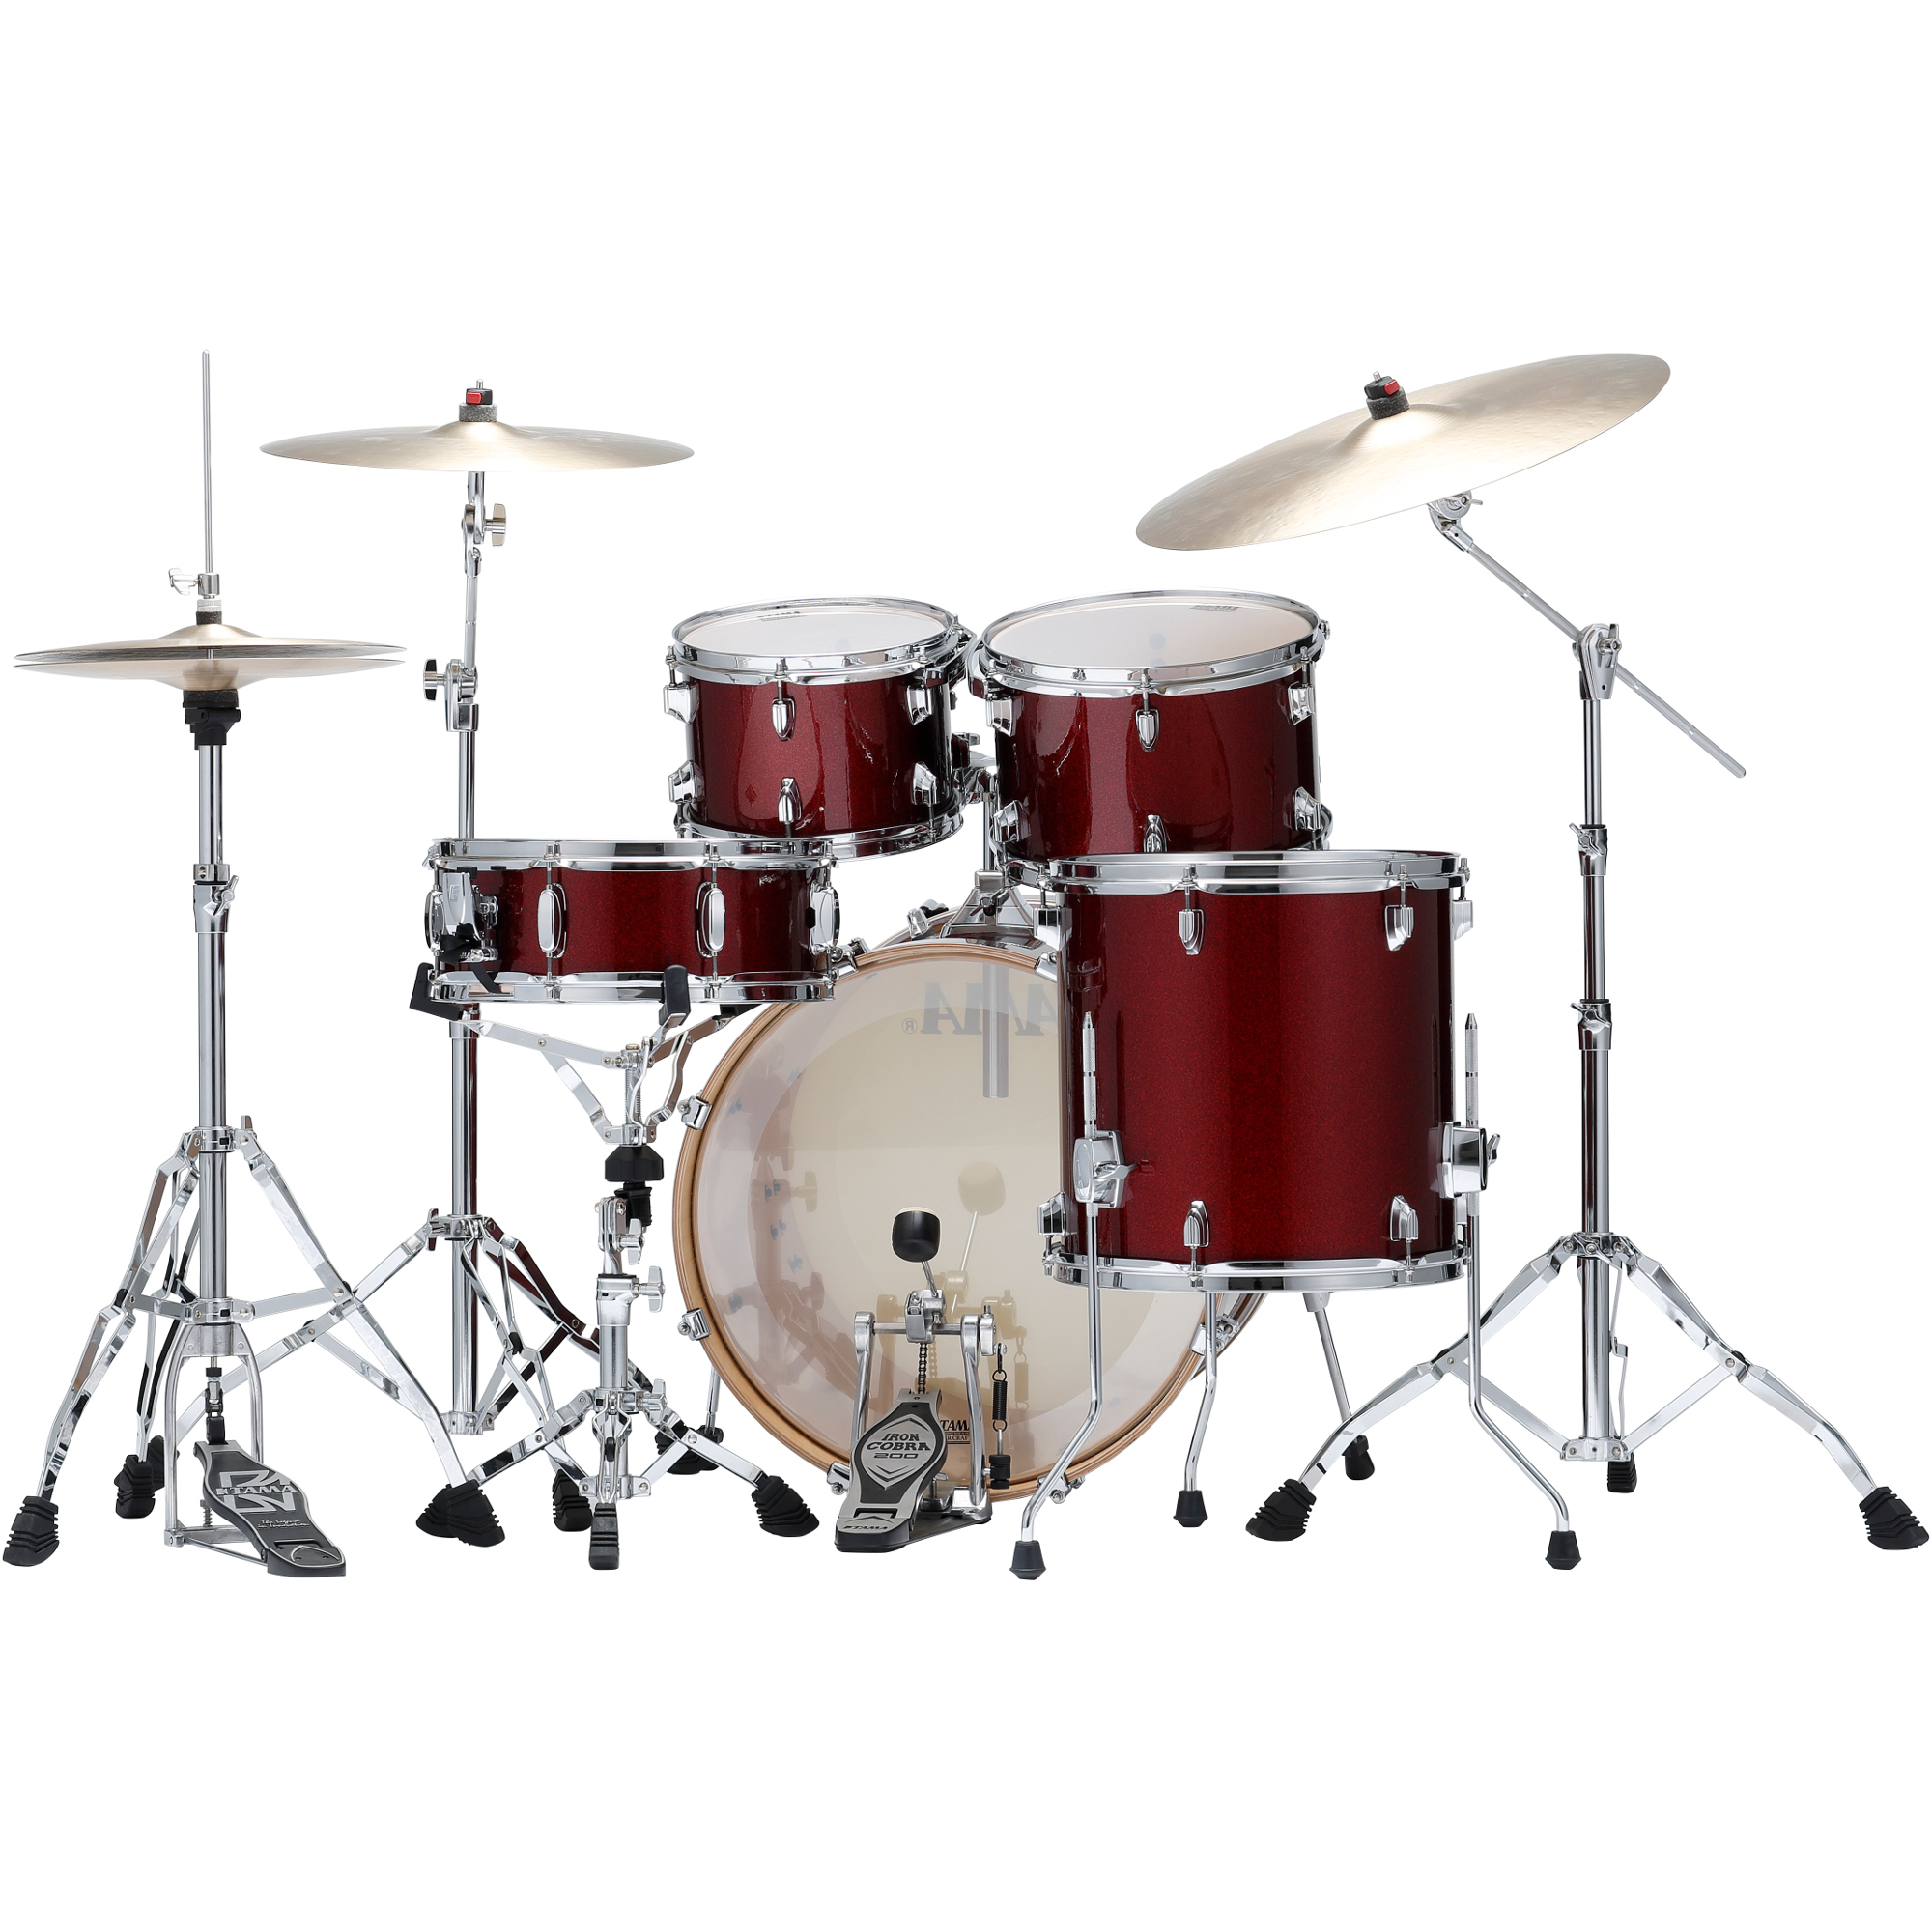 Tama Superstar Cl 5 Futs Shell Kit - 5 FÛts - Dark Red Sparkle - Standard drum kit - Variation 1